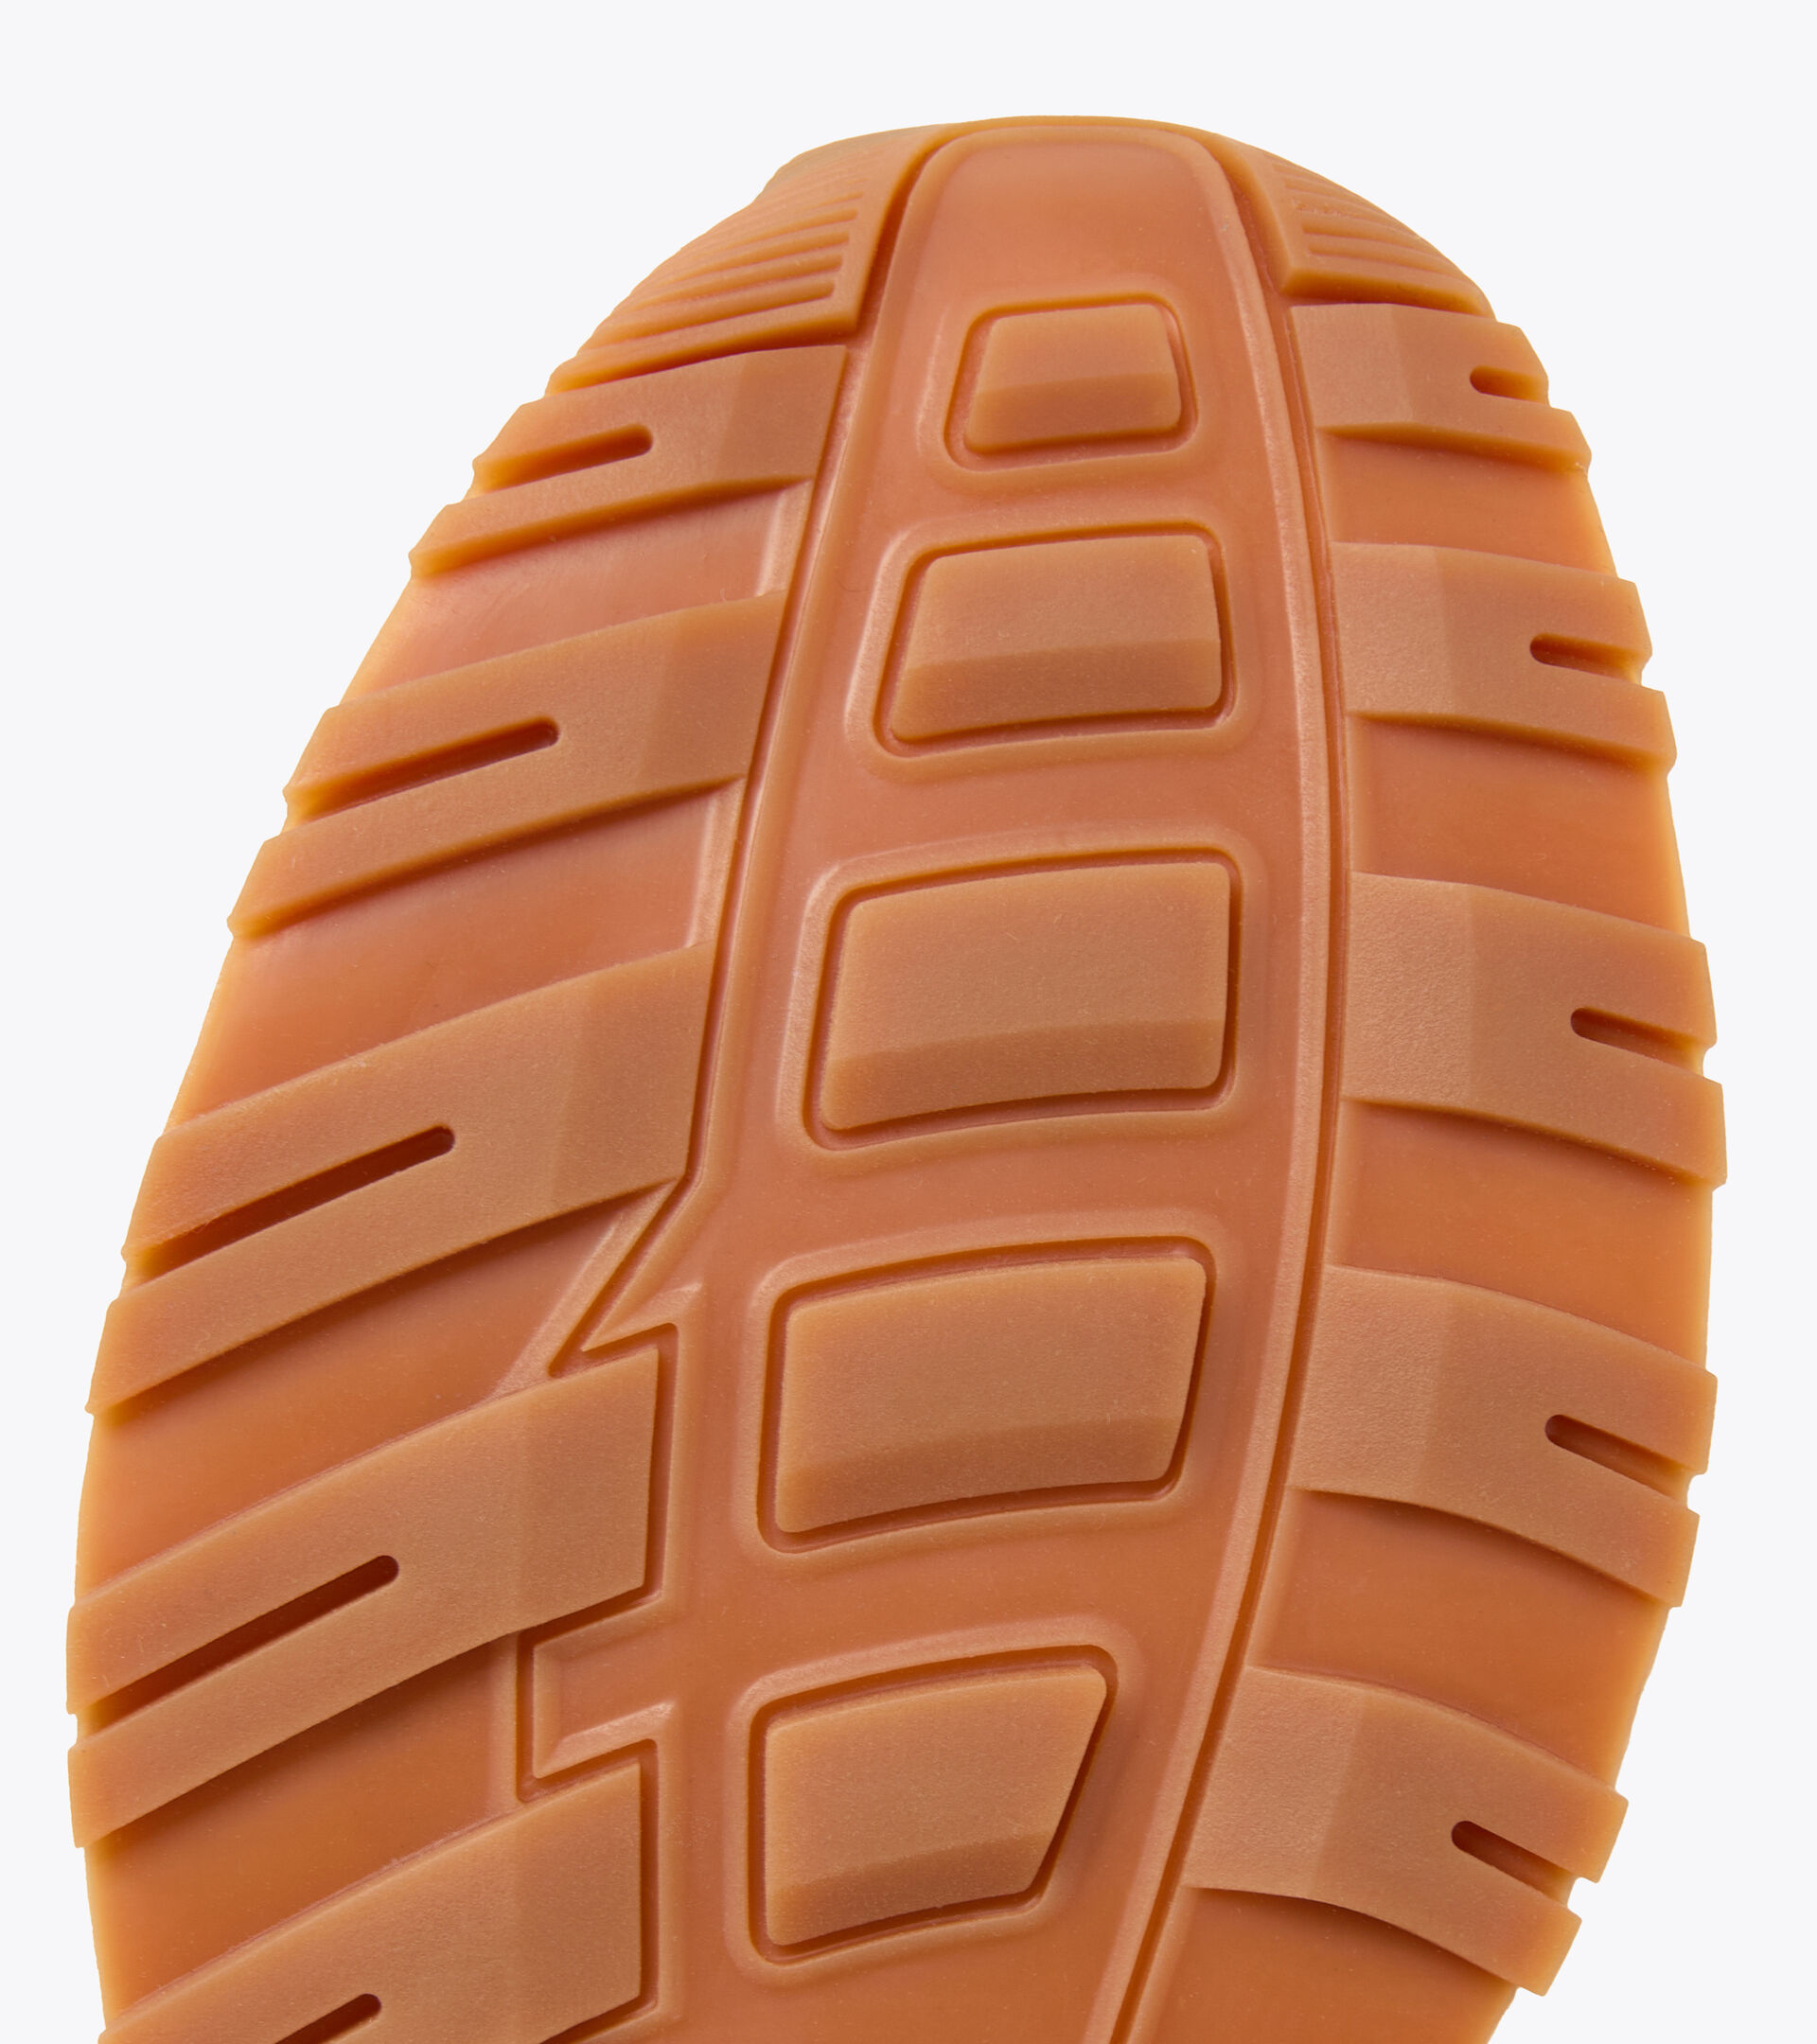 Zapatilla deportiva - Gender neutral N902 BEIGE HUMO/OLIVINO - Diadora